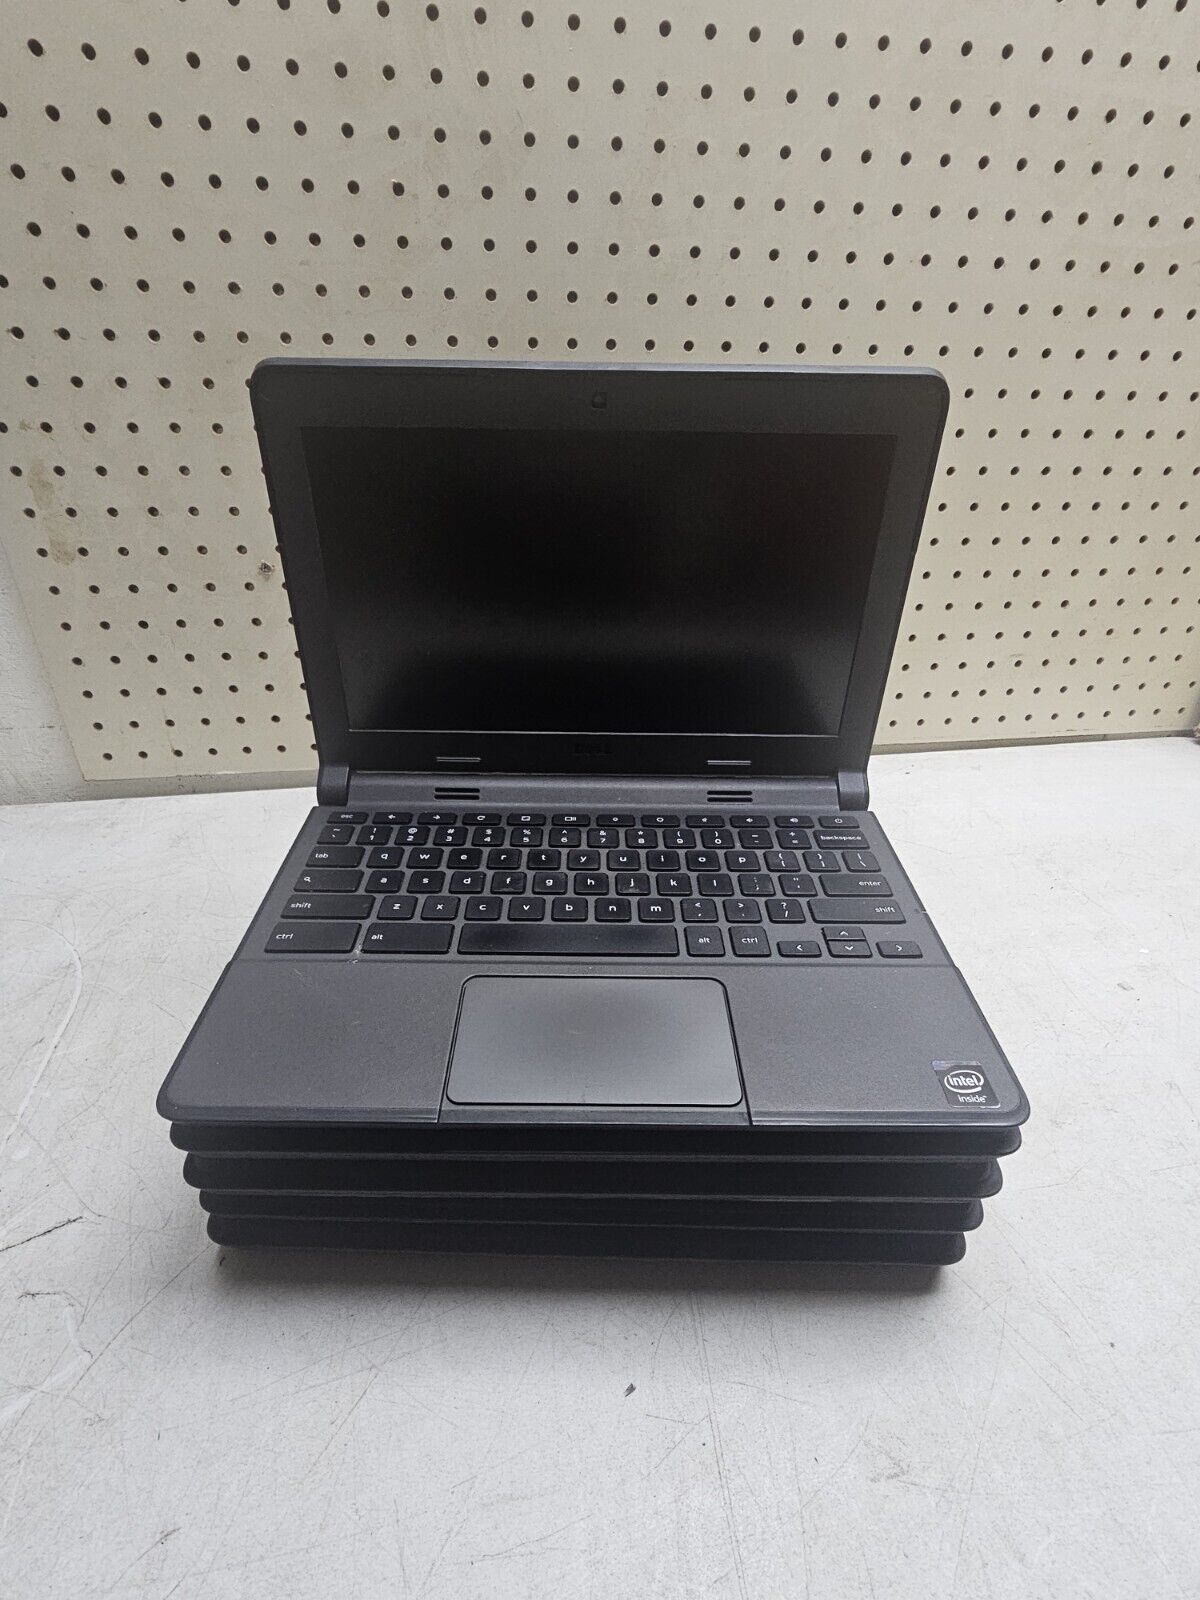 Lot of Five (5) Dell Chromebook 11 P22T Laptop - Intel Celeron N2840 - READ